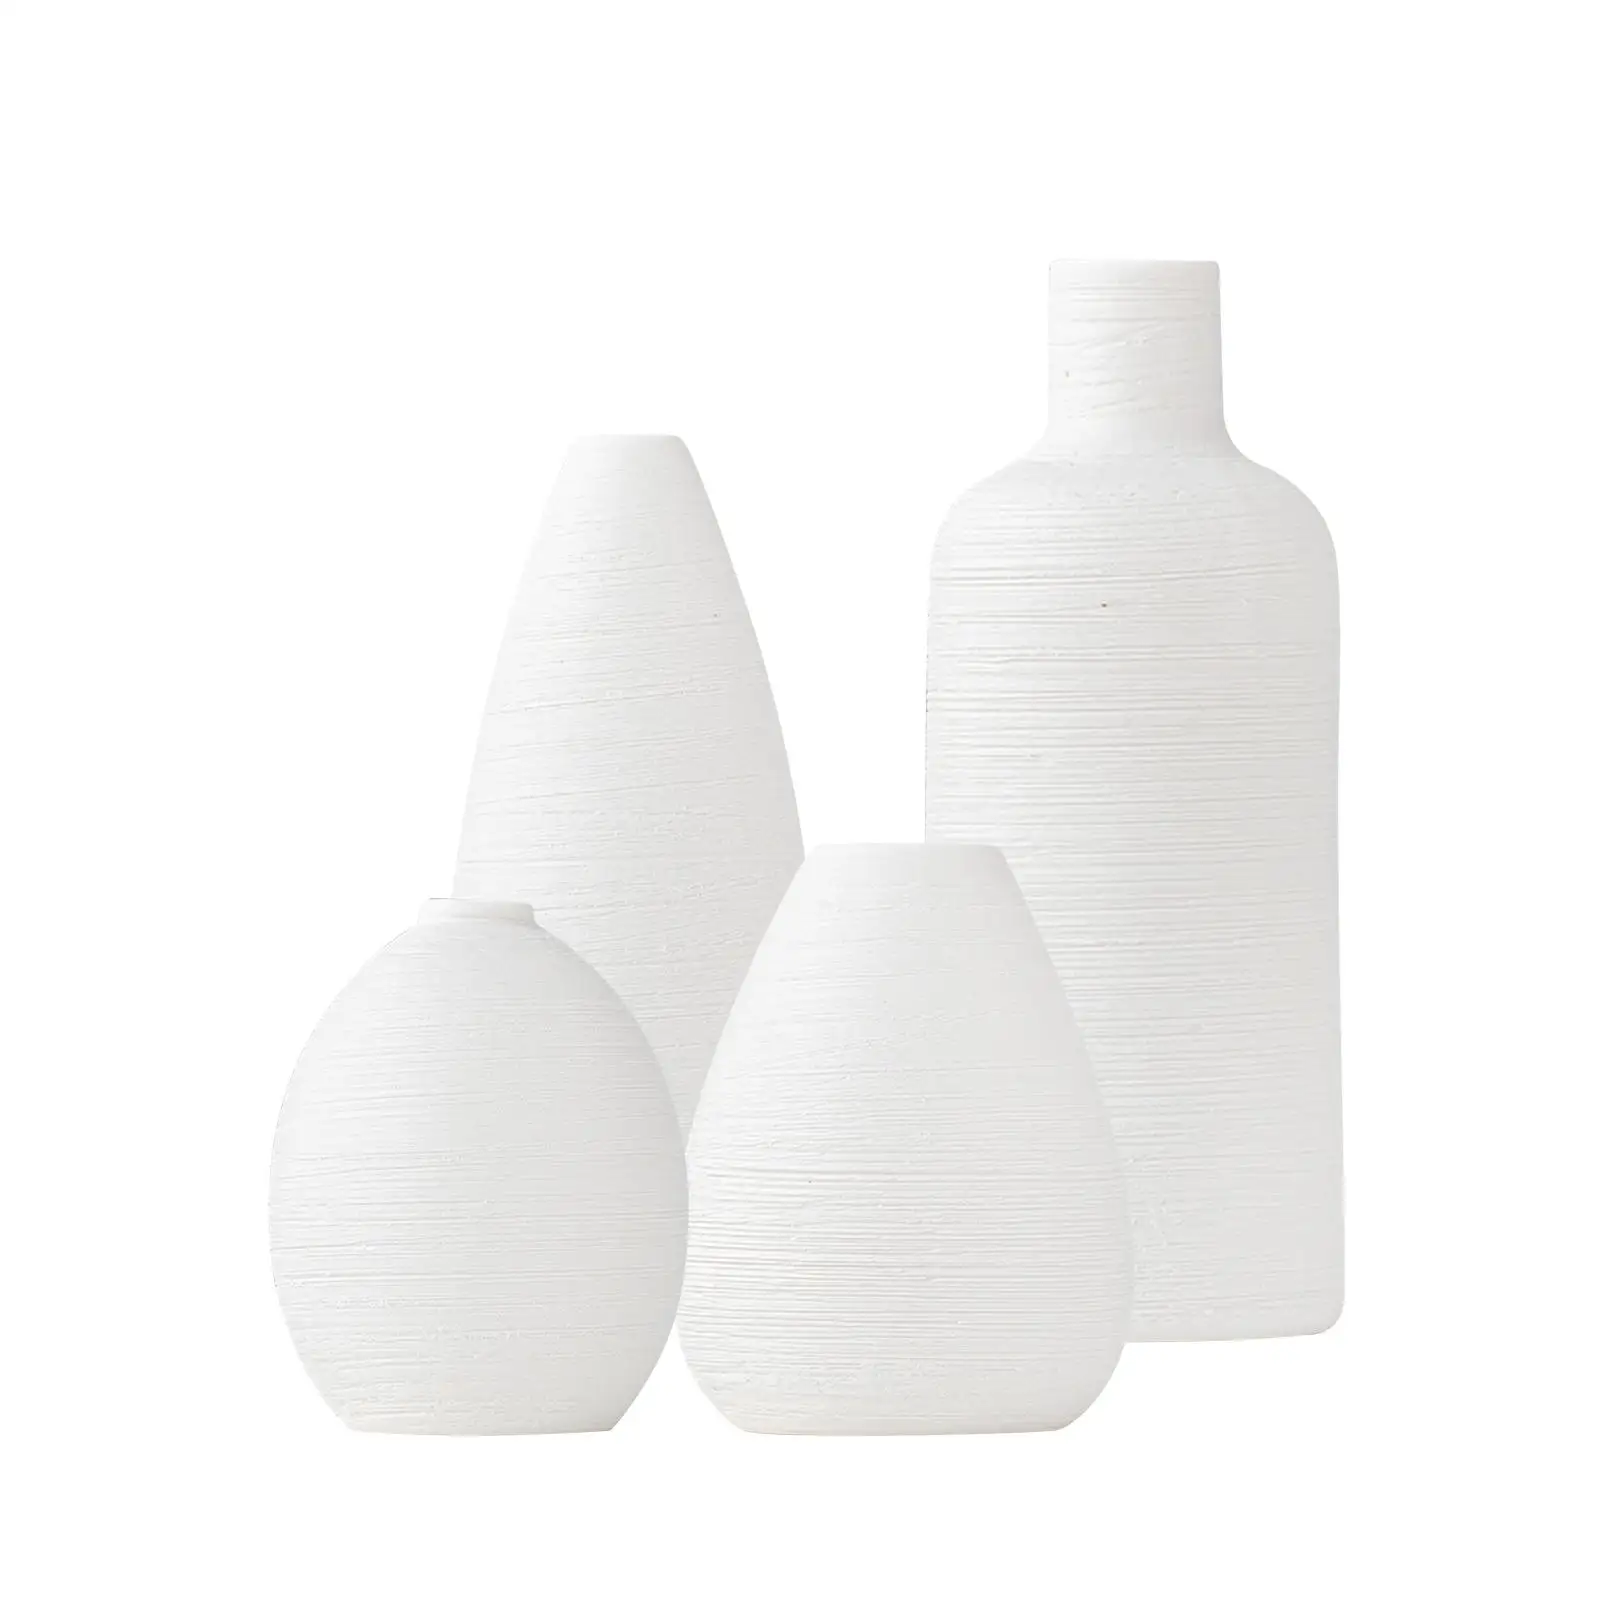 4x Minimalist Flower Vases Decorative Geometric Centerpieces Ceramic Elegant Vases for Kitchen Desk Table Living Room Shelf